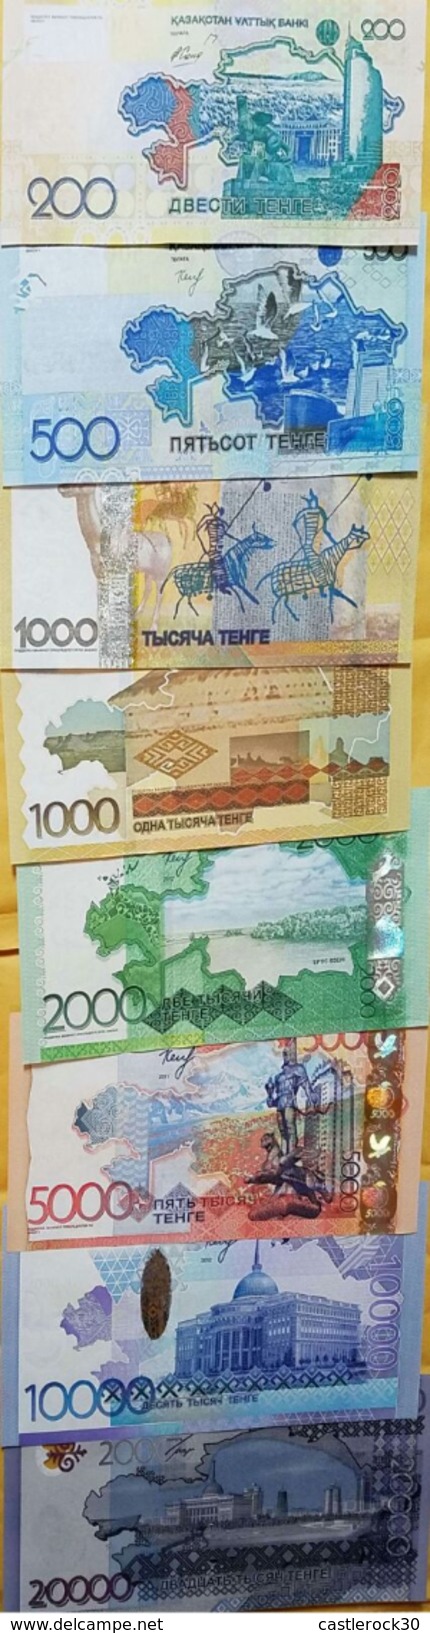 O) 2006  KAZAKHSTAN, BANKNOTE-PAPER MONEY -ISO 4217 KZT -TENGE KAZAJO, COMPLETE SERIES, UNC, ARCHEOLOGY, RUPEST PAINTING - Kazakhstan